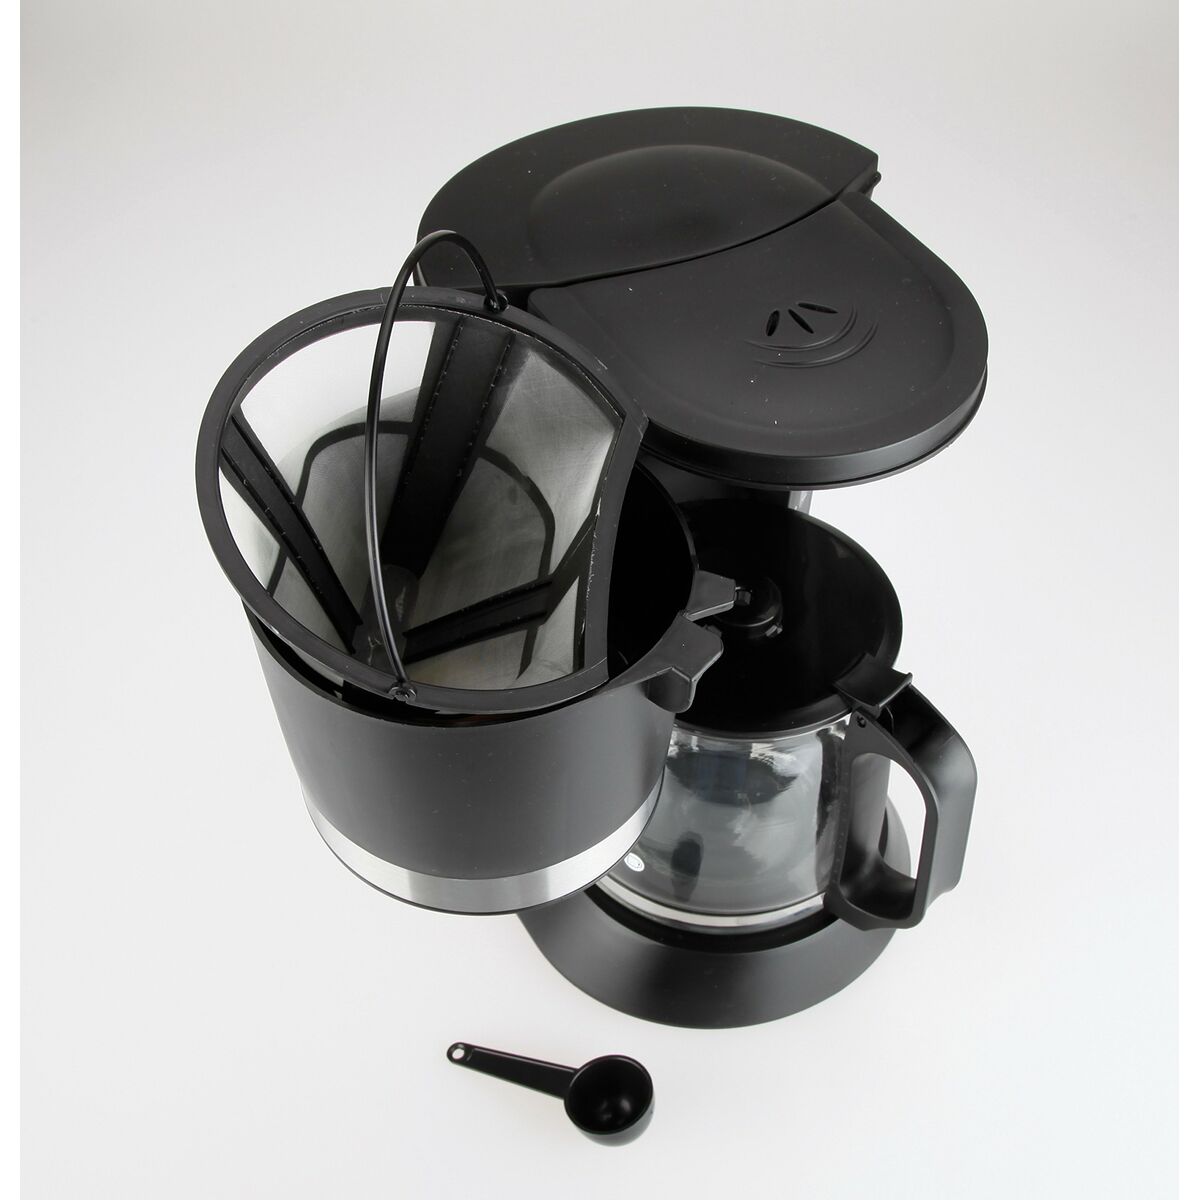 Drip Coffee Machine Jata Ca290 680W noir